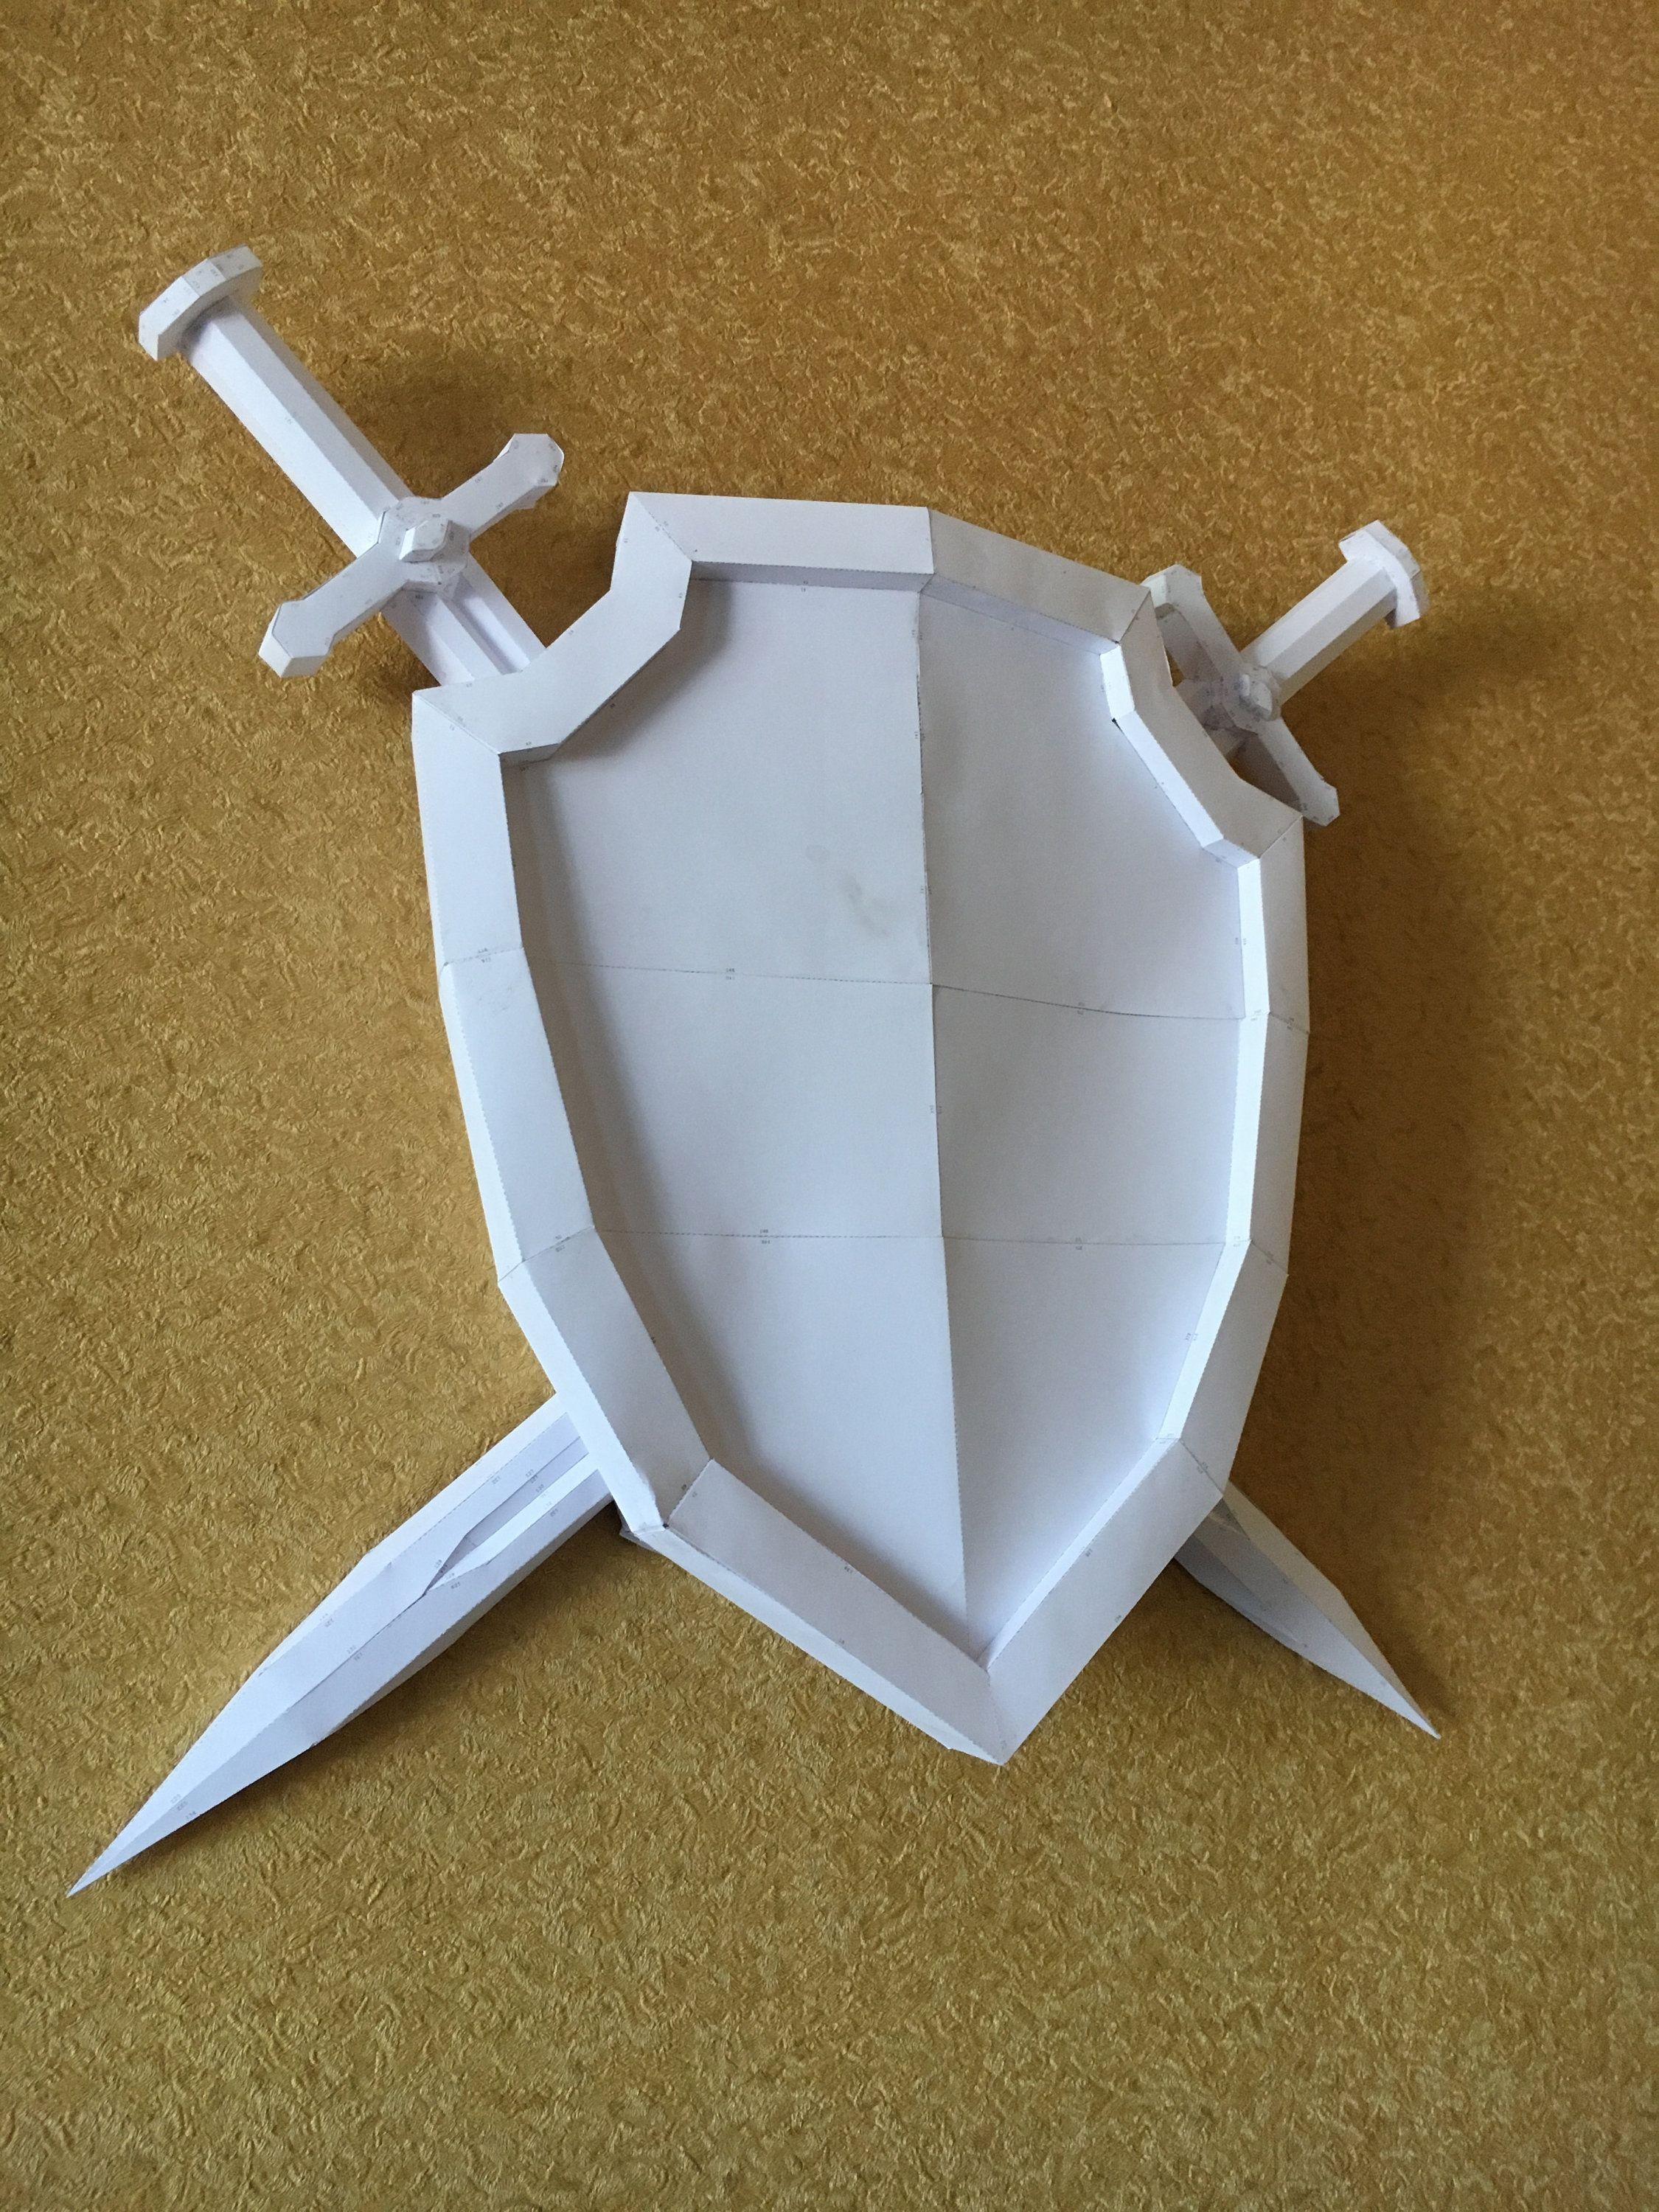 Final Fantasy Papercraft Sword Shield Diy Papercraft Model ÐÑÐ¼Ð°Ð¶Ð½ÑÐµ Ð¸Ð·Ð´ÐµÐ Ð¸Ñ